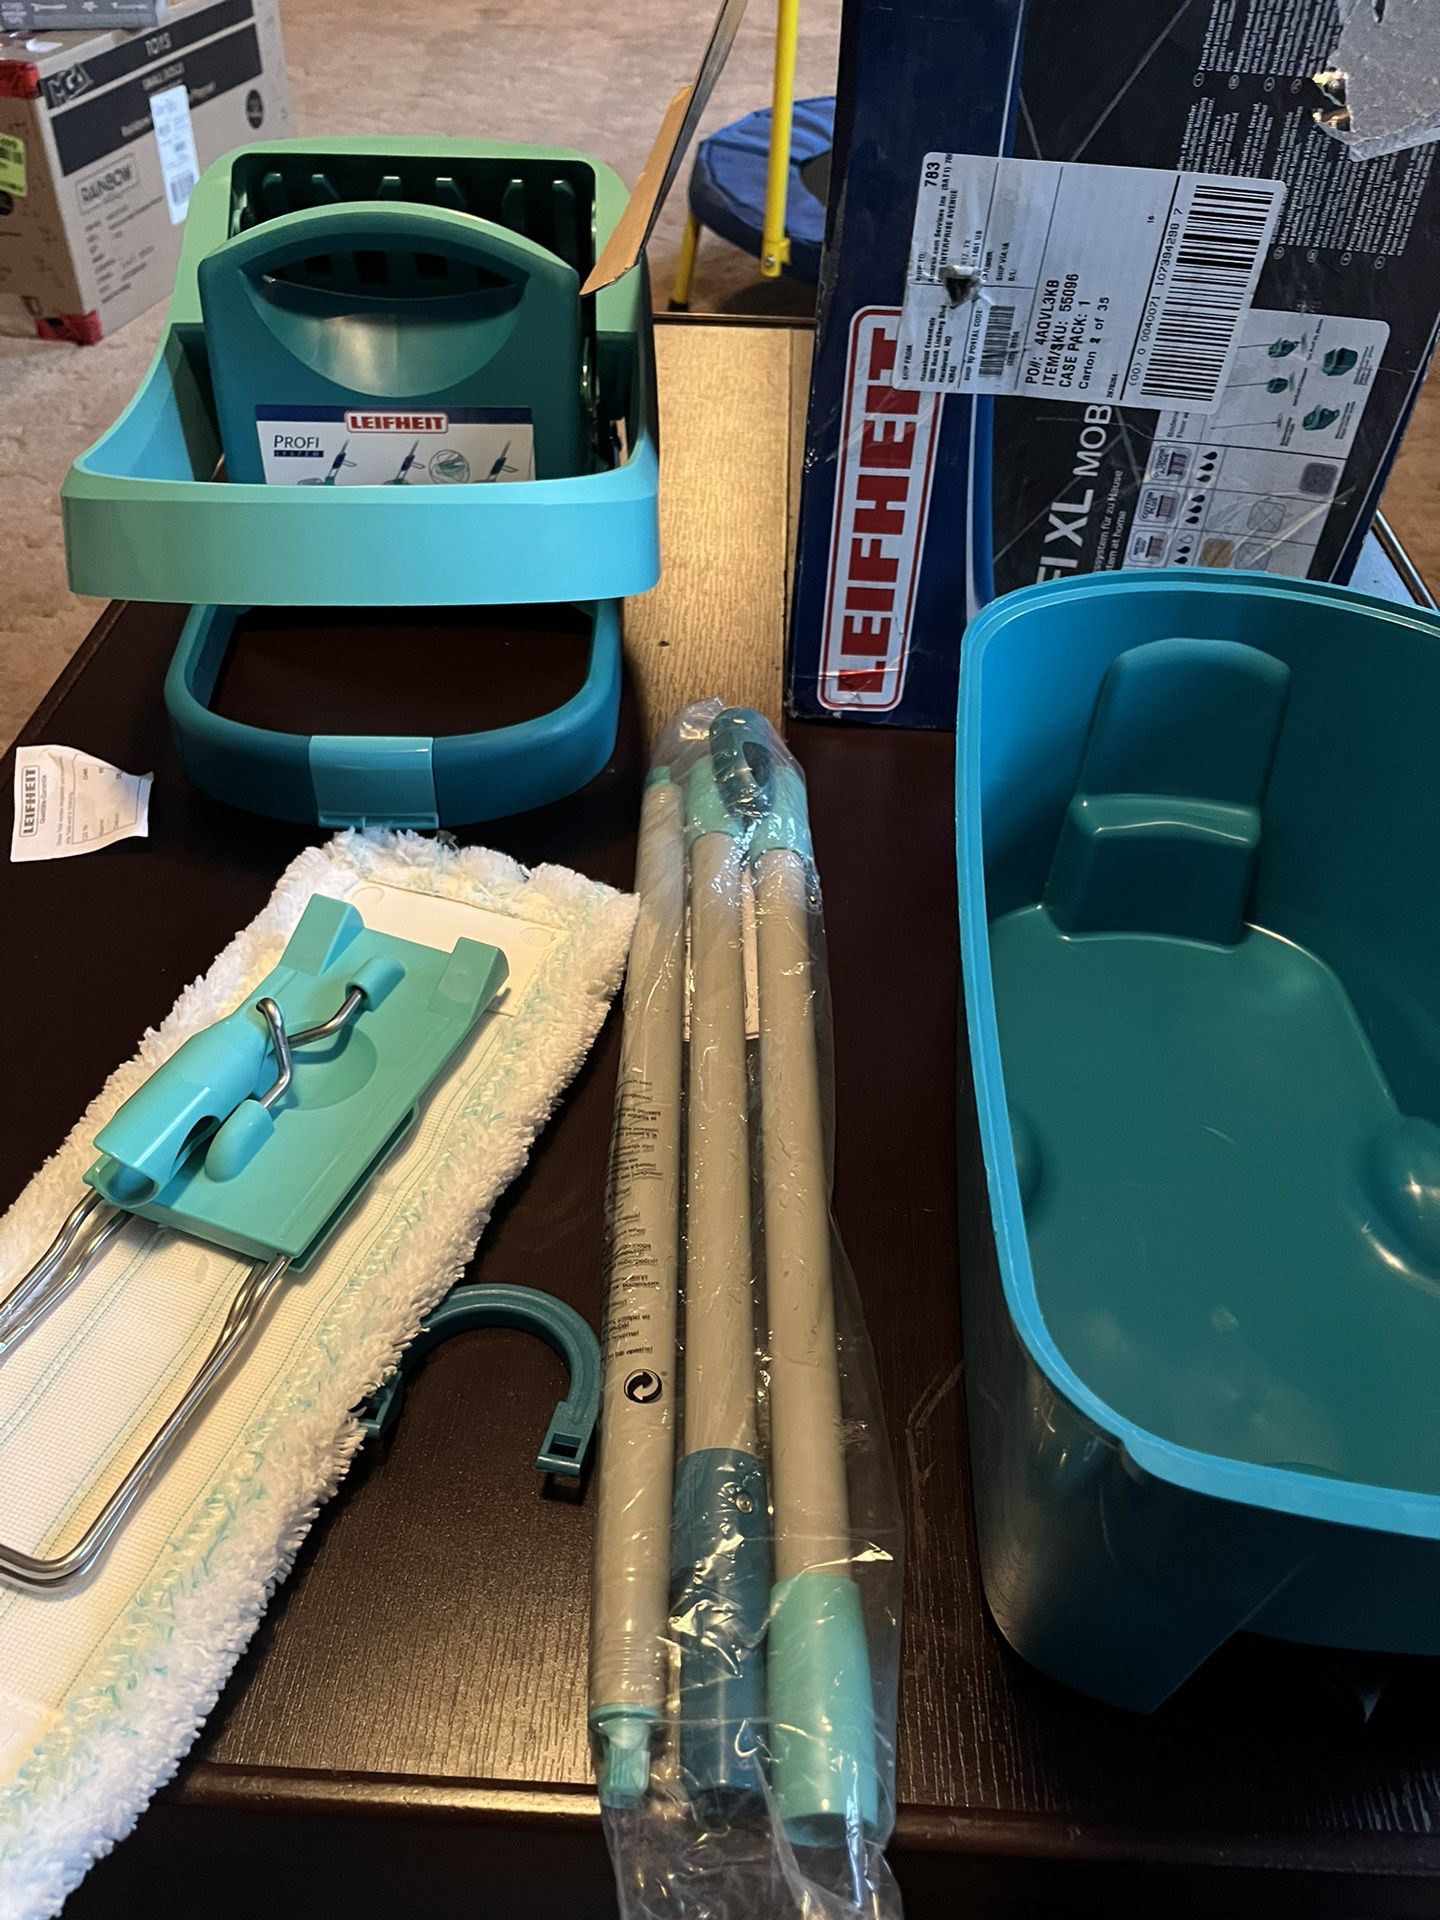 LeifheitProfi Mop and Bucket Set with Rollers, Turquoise